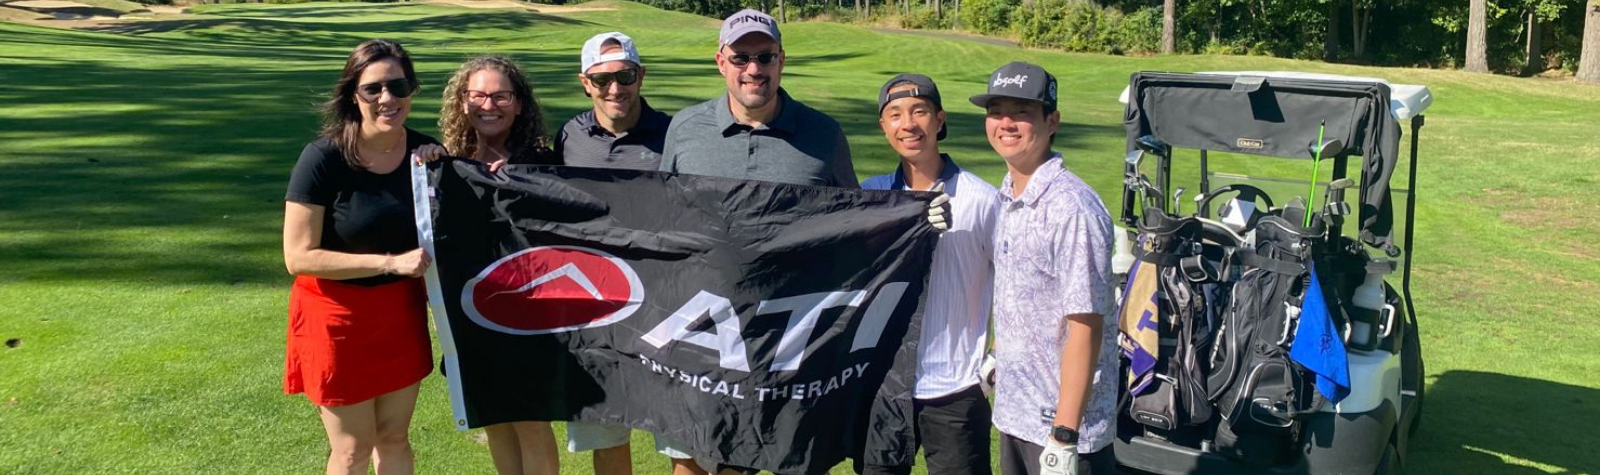 ATI Foundation Hosts Golf Outing in Washington